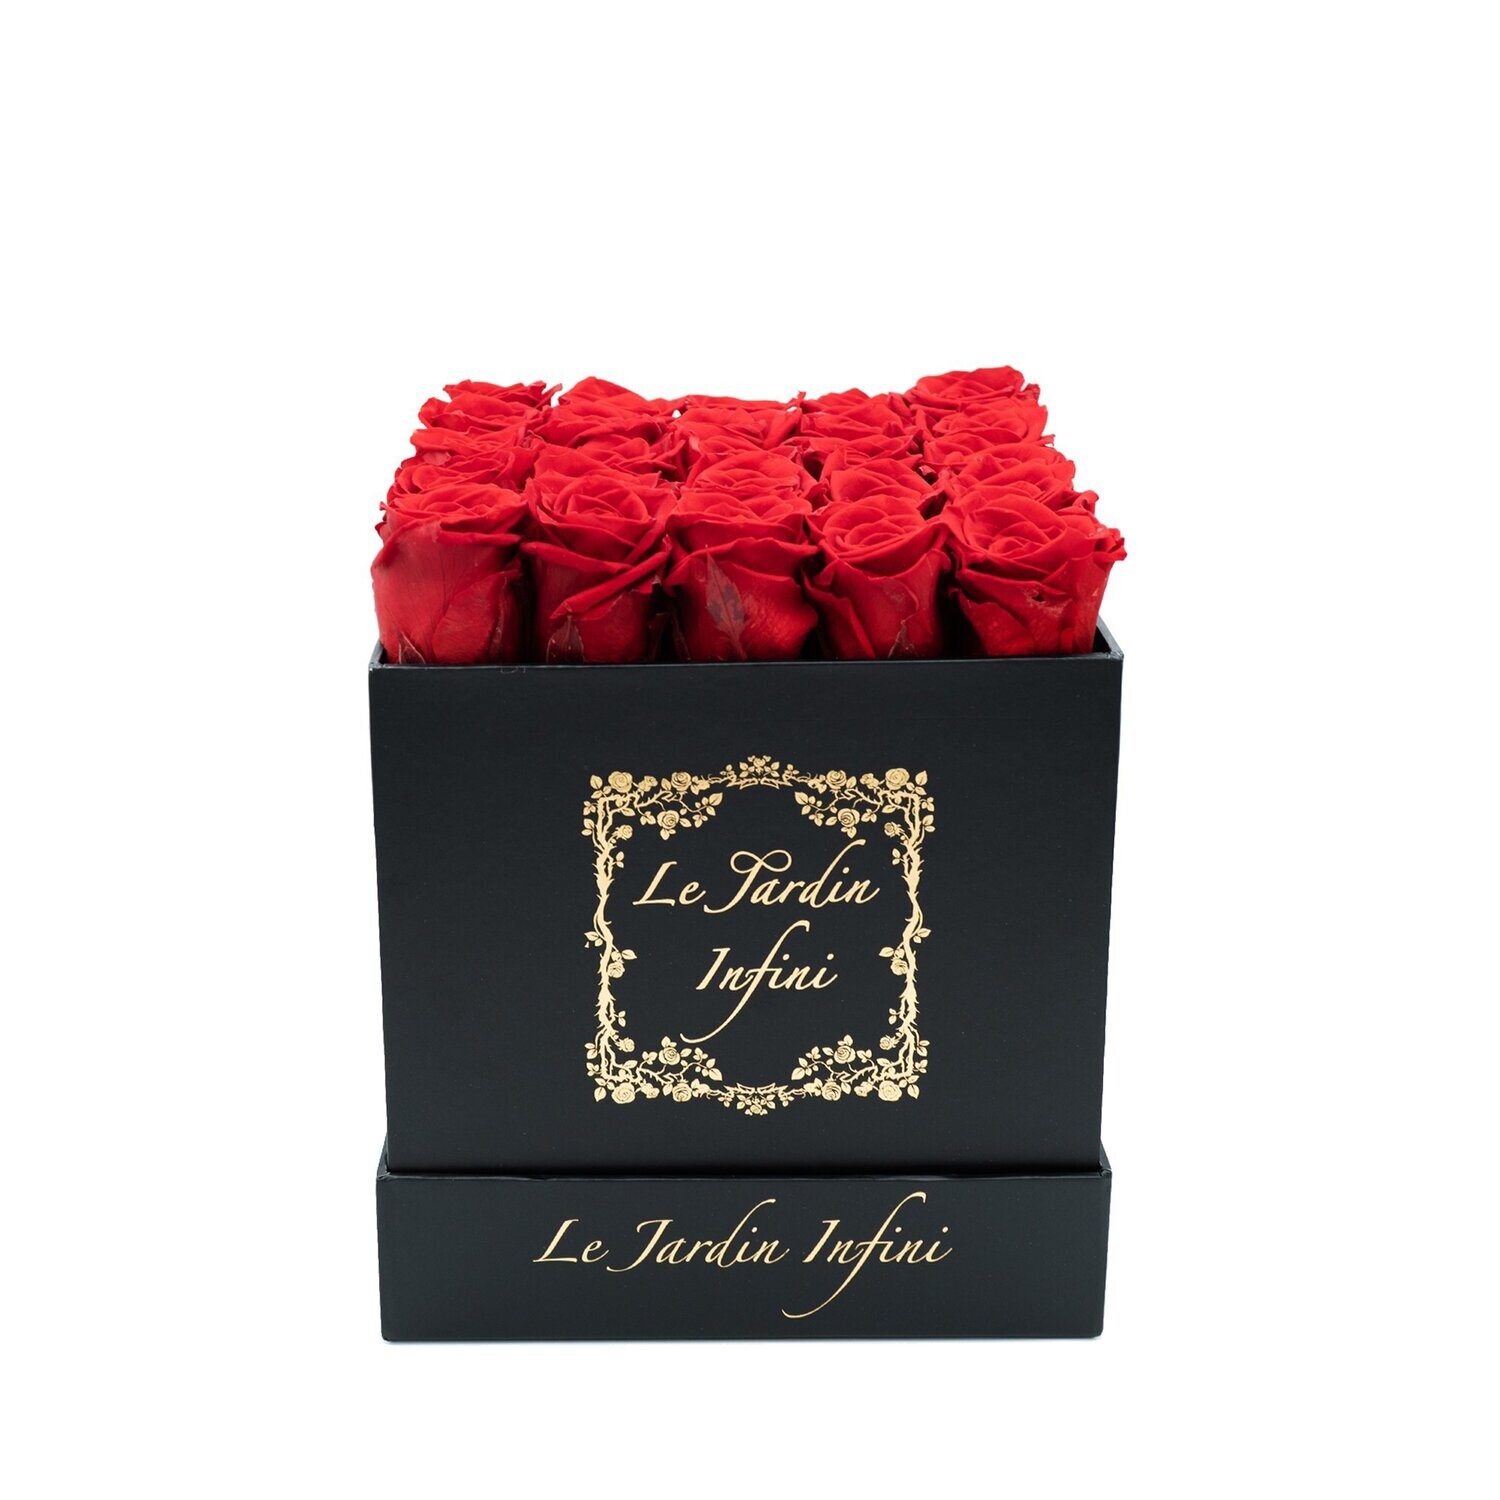 Red Preserved Roses - Medium Square Black Box